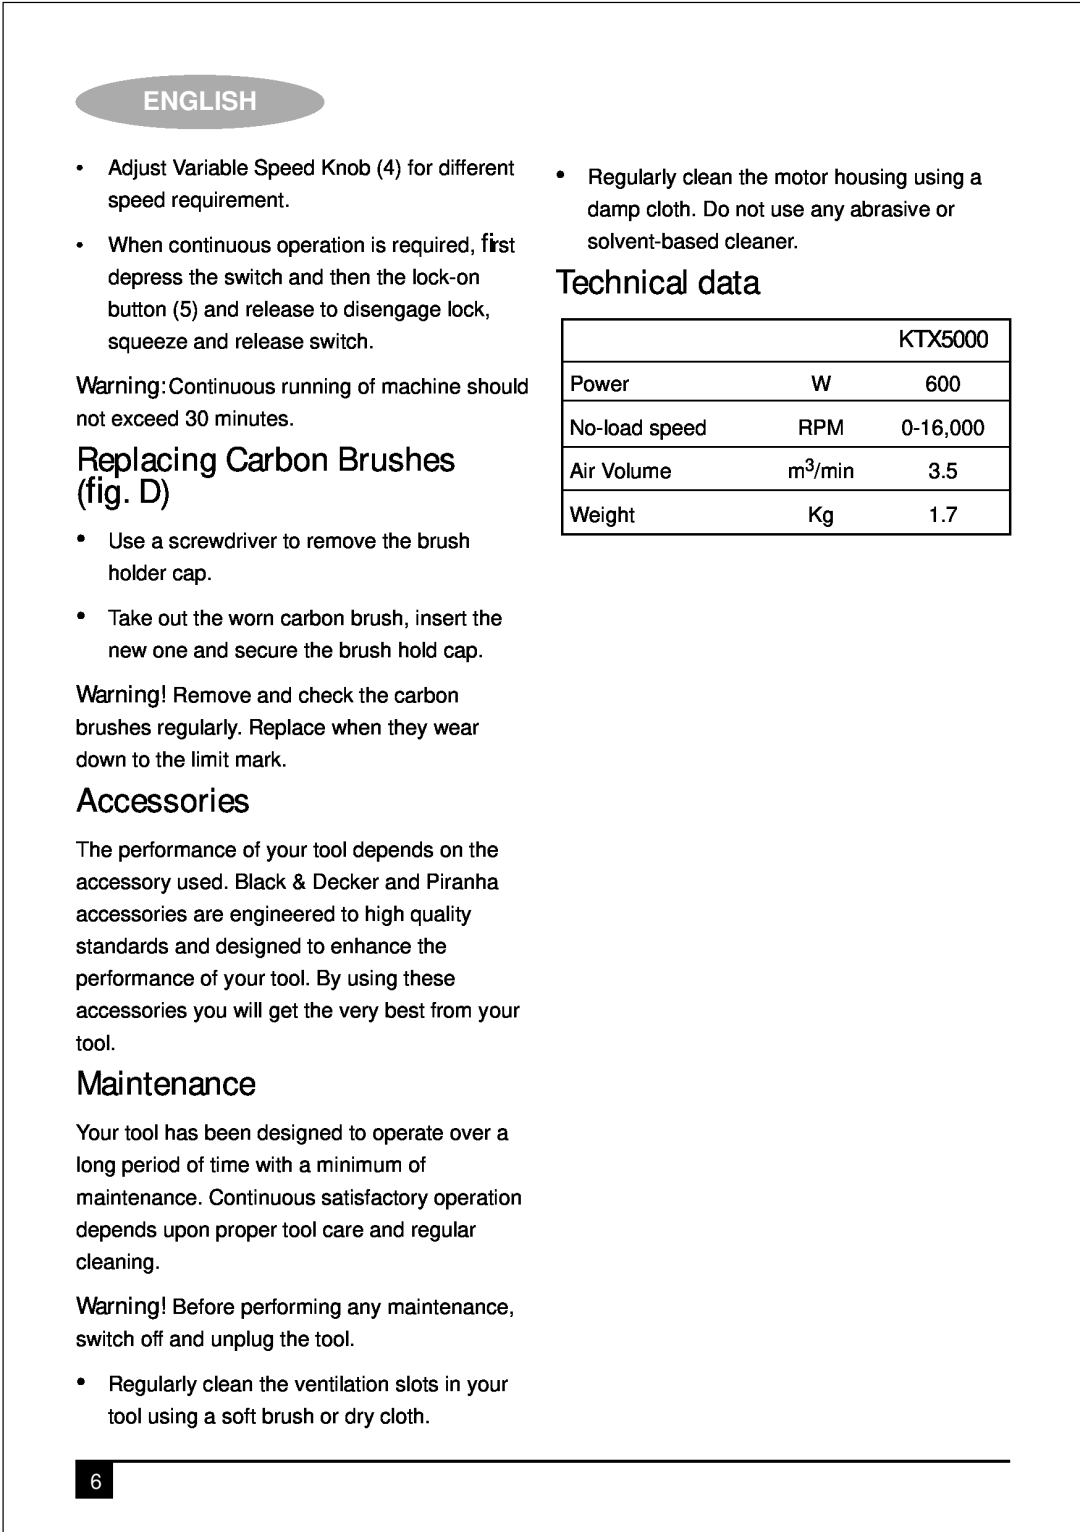 Black & Decker KTX5000 manual Replacing Carbon Brushes ﬁg. D, Accessories, Maintenance, Technical data, English 